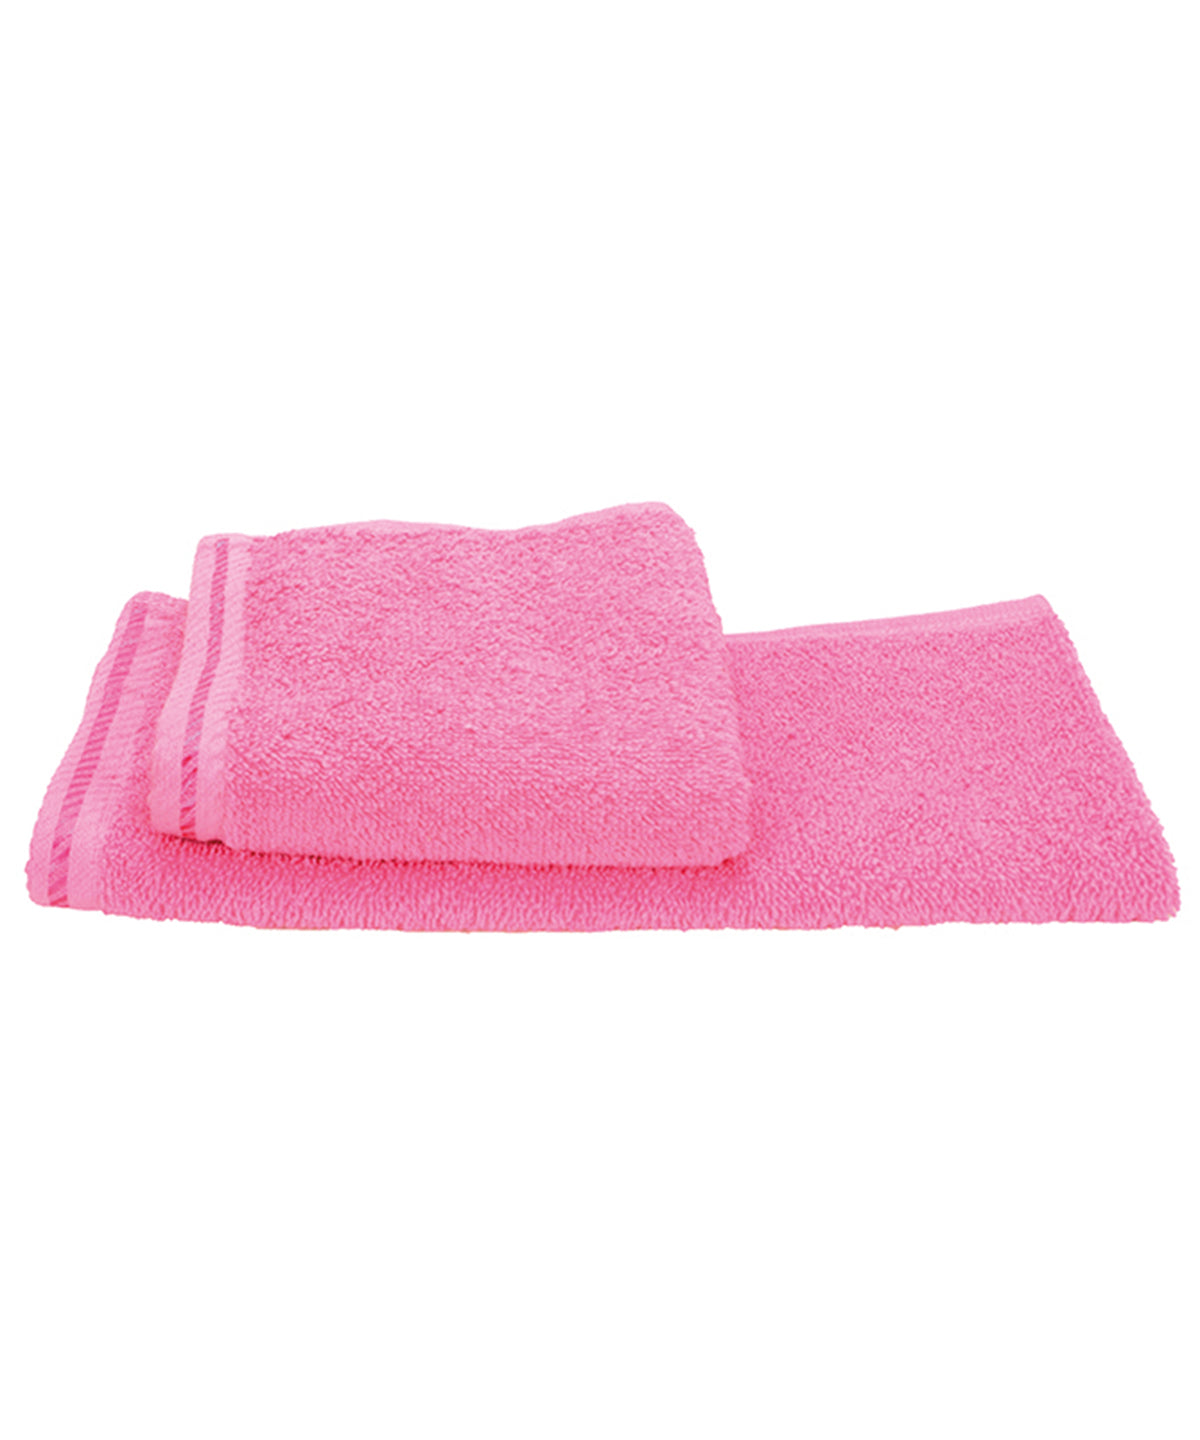 Personalised Towels - Mid Pink A&R Towels ARTG® Guest towel